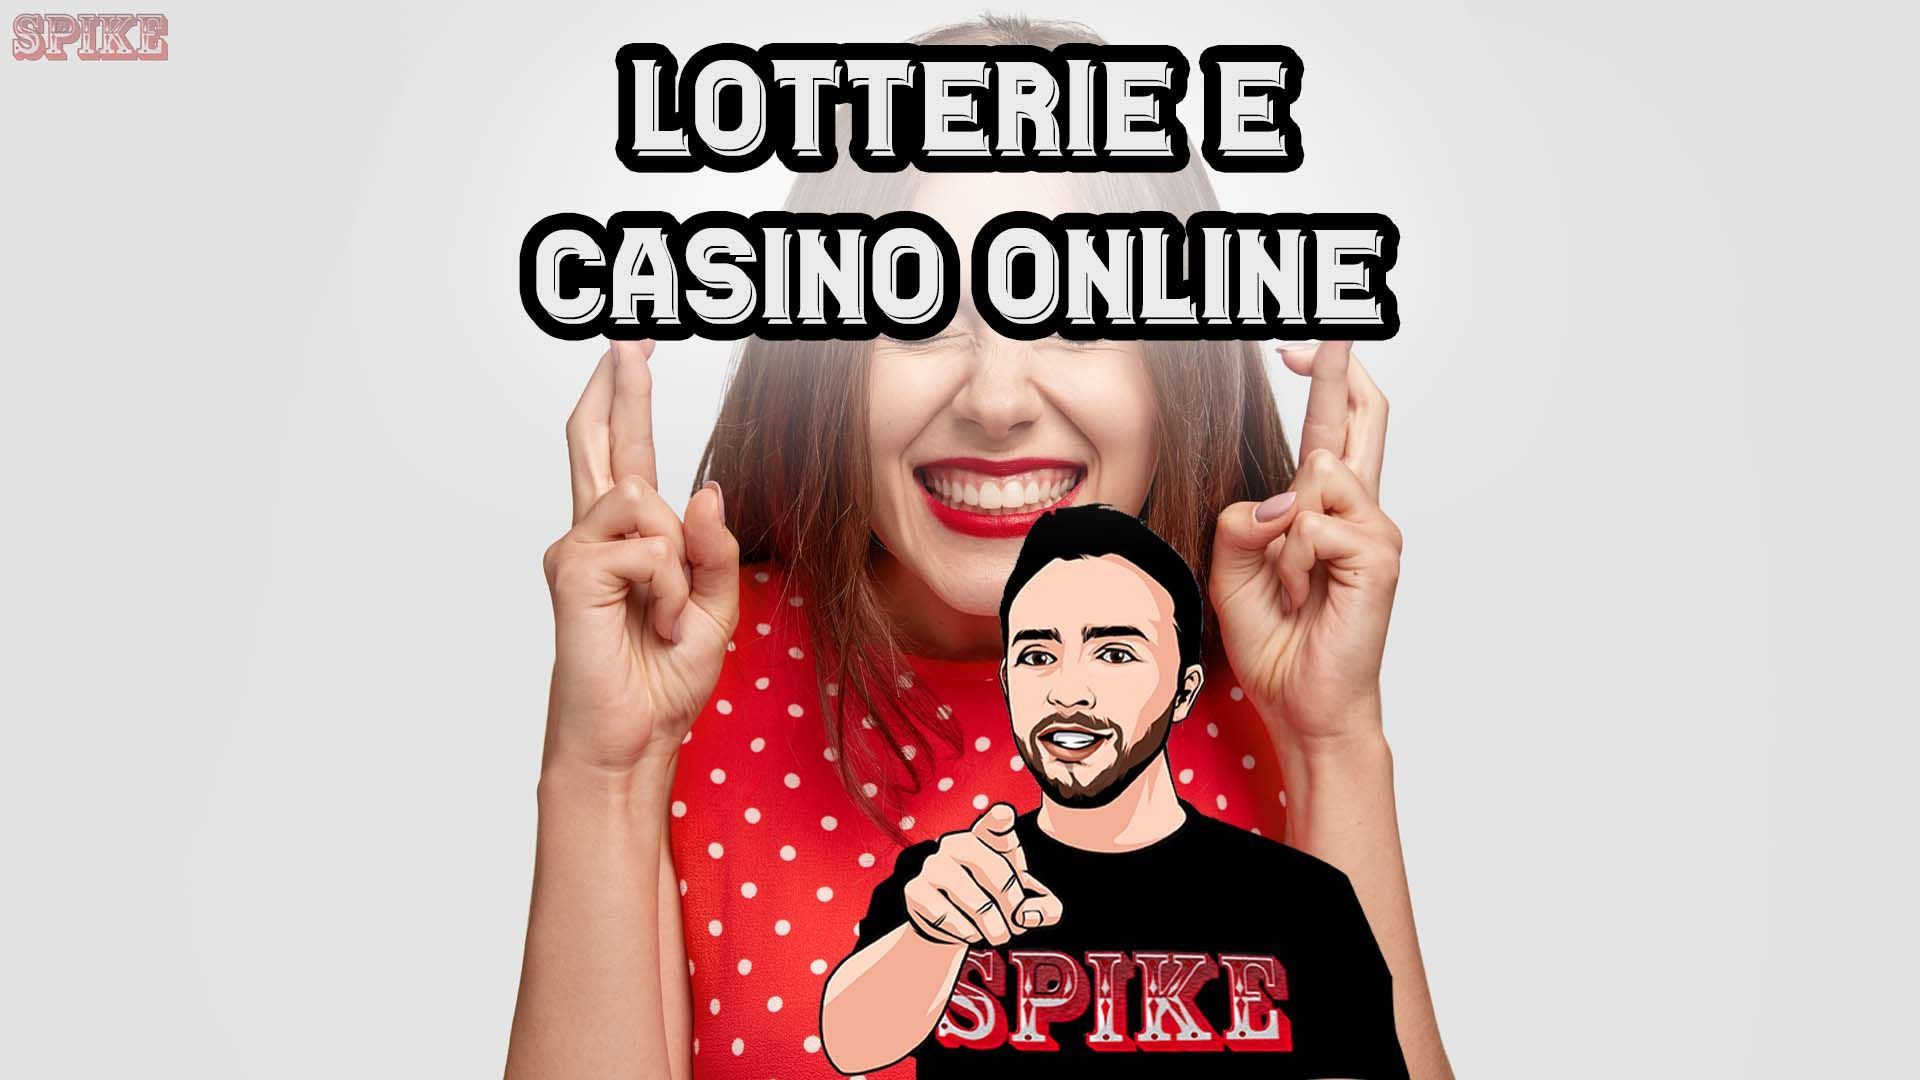 Lotterie Casino